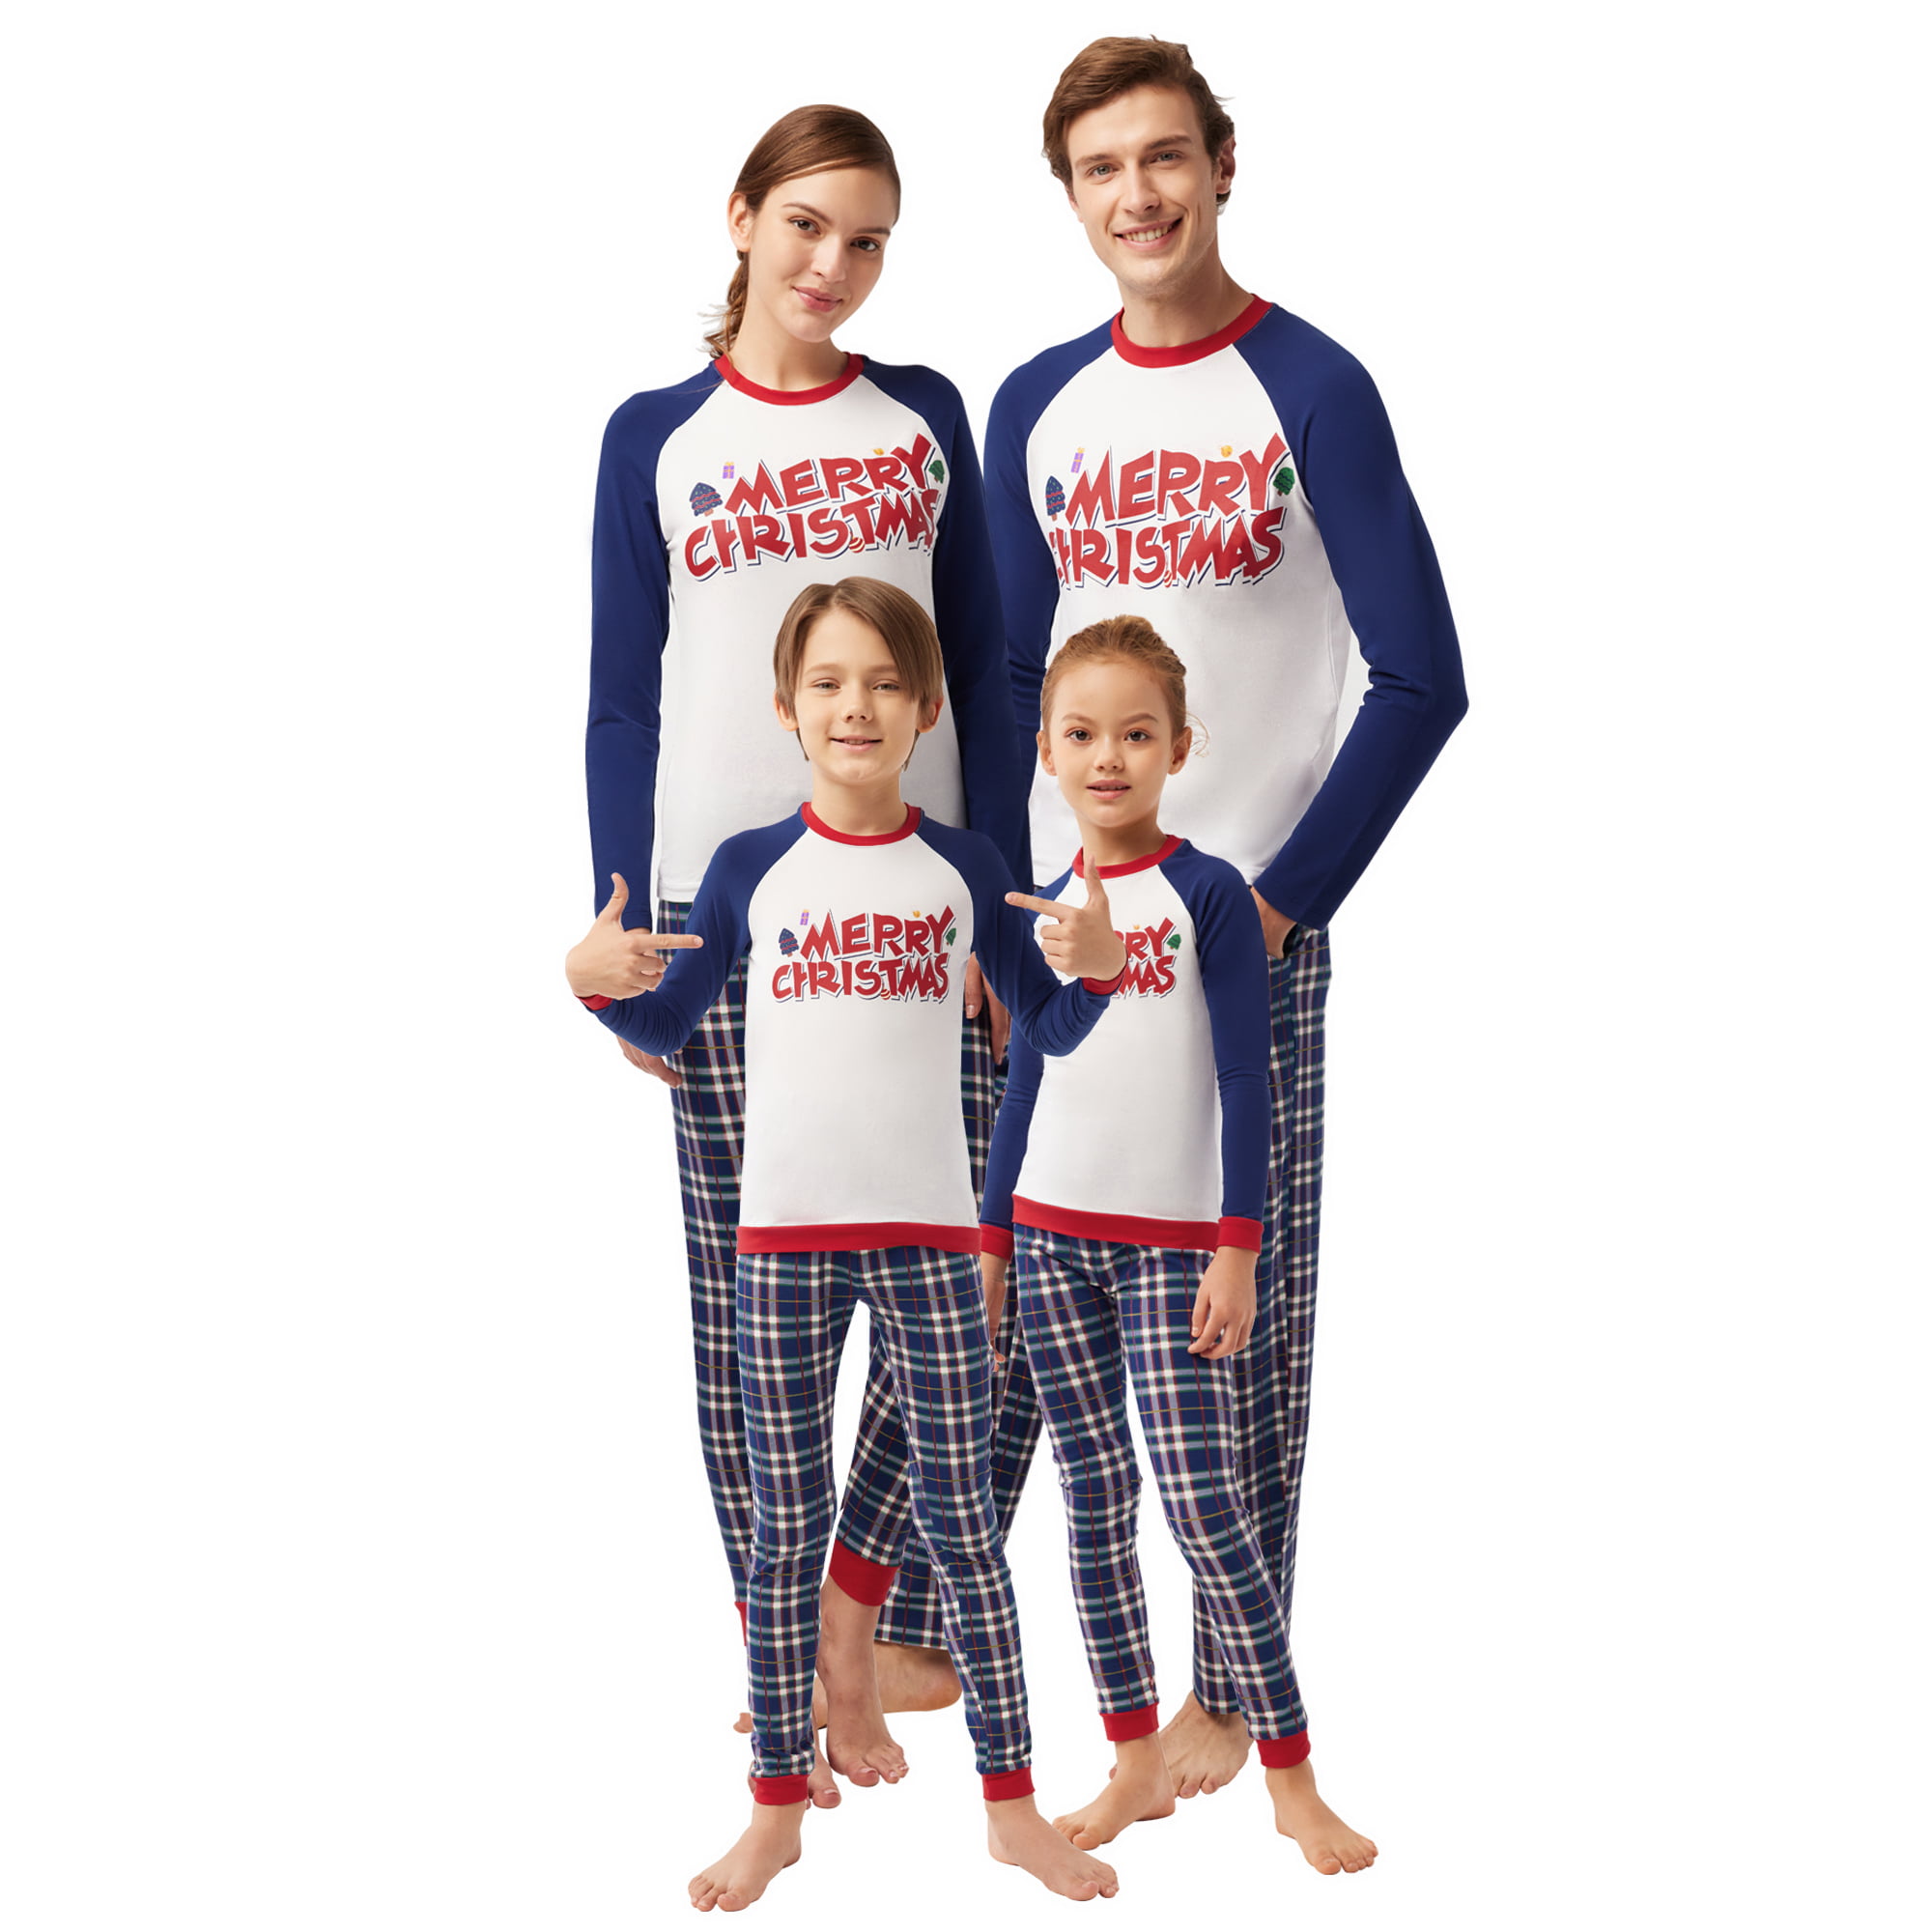 SIORO Matching Family Christmas Pajamas Set PJ's Sleepwear Letter Printed  Top with Plaid Bottom, Blue and white plaid, Men_M